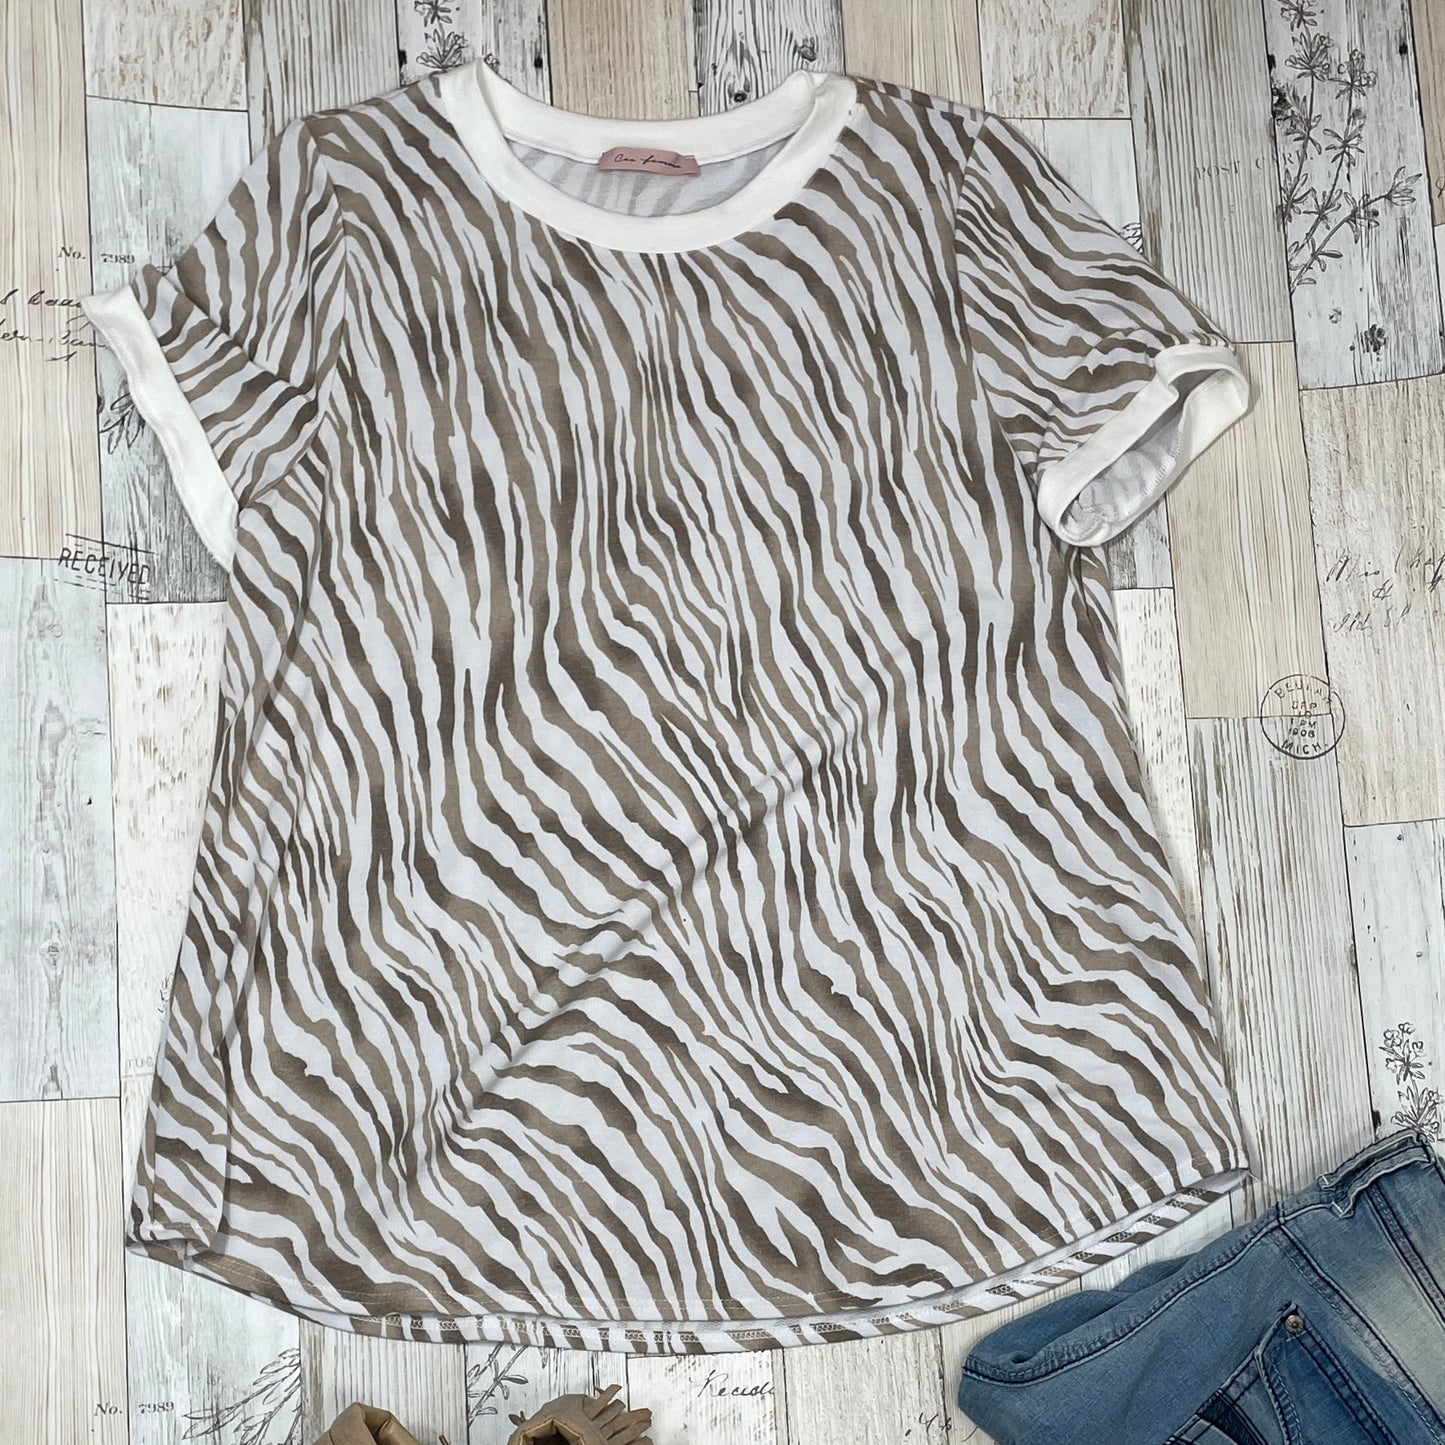 Tan Zebra Print Top Size XLarge and 2XLarge - Sassy Chick Clothing